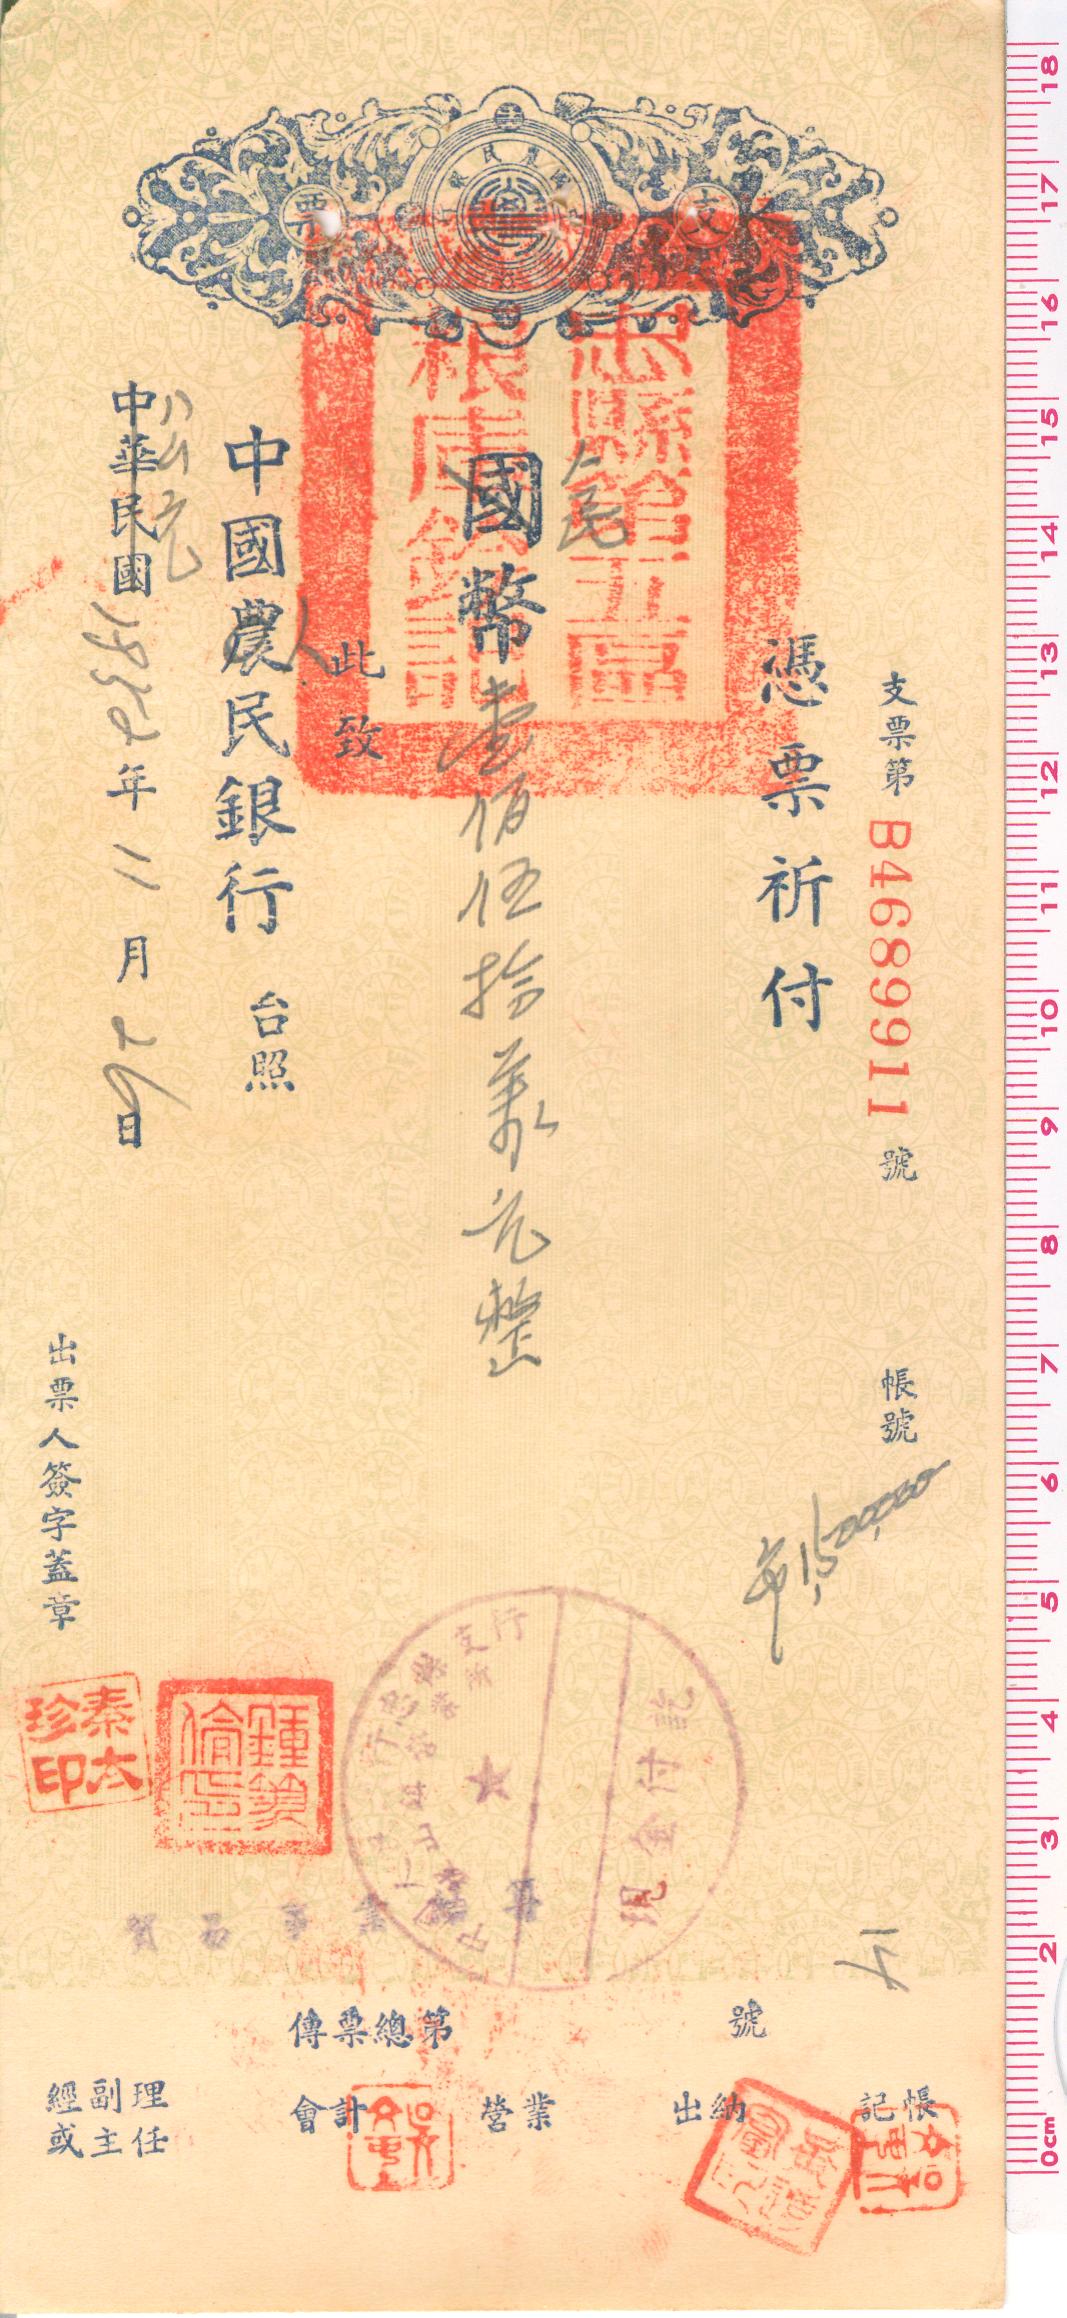 D1020, Farmer's Bank of China, Check of 1952